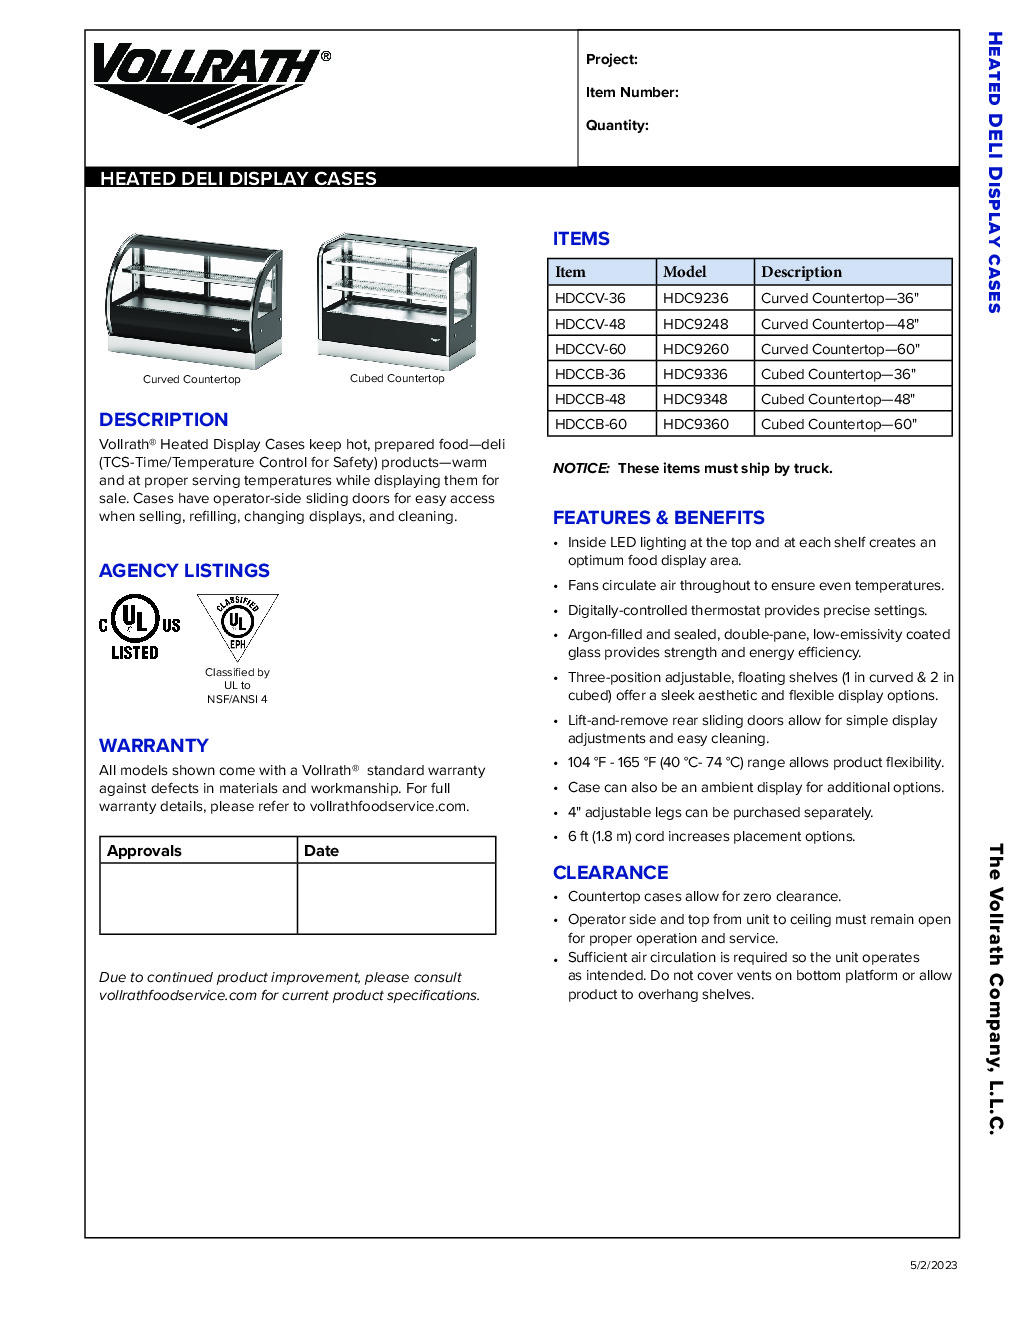 Vollrath HDCCV-36 Countertop Heated Deli Display Case